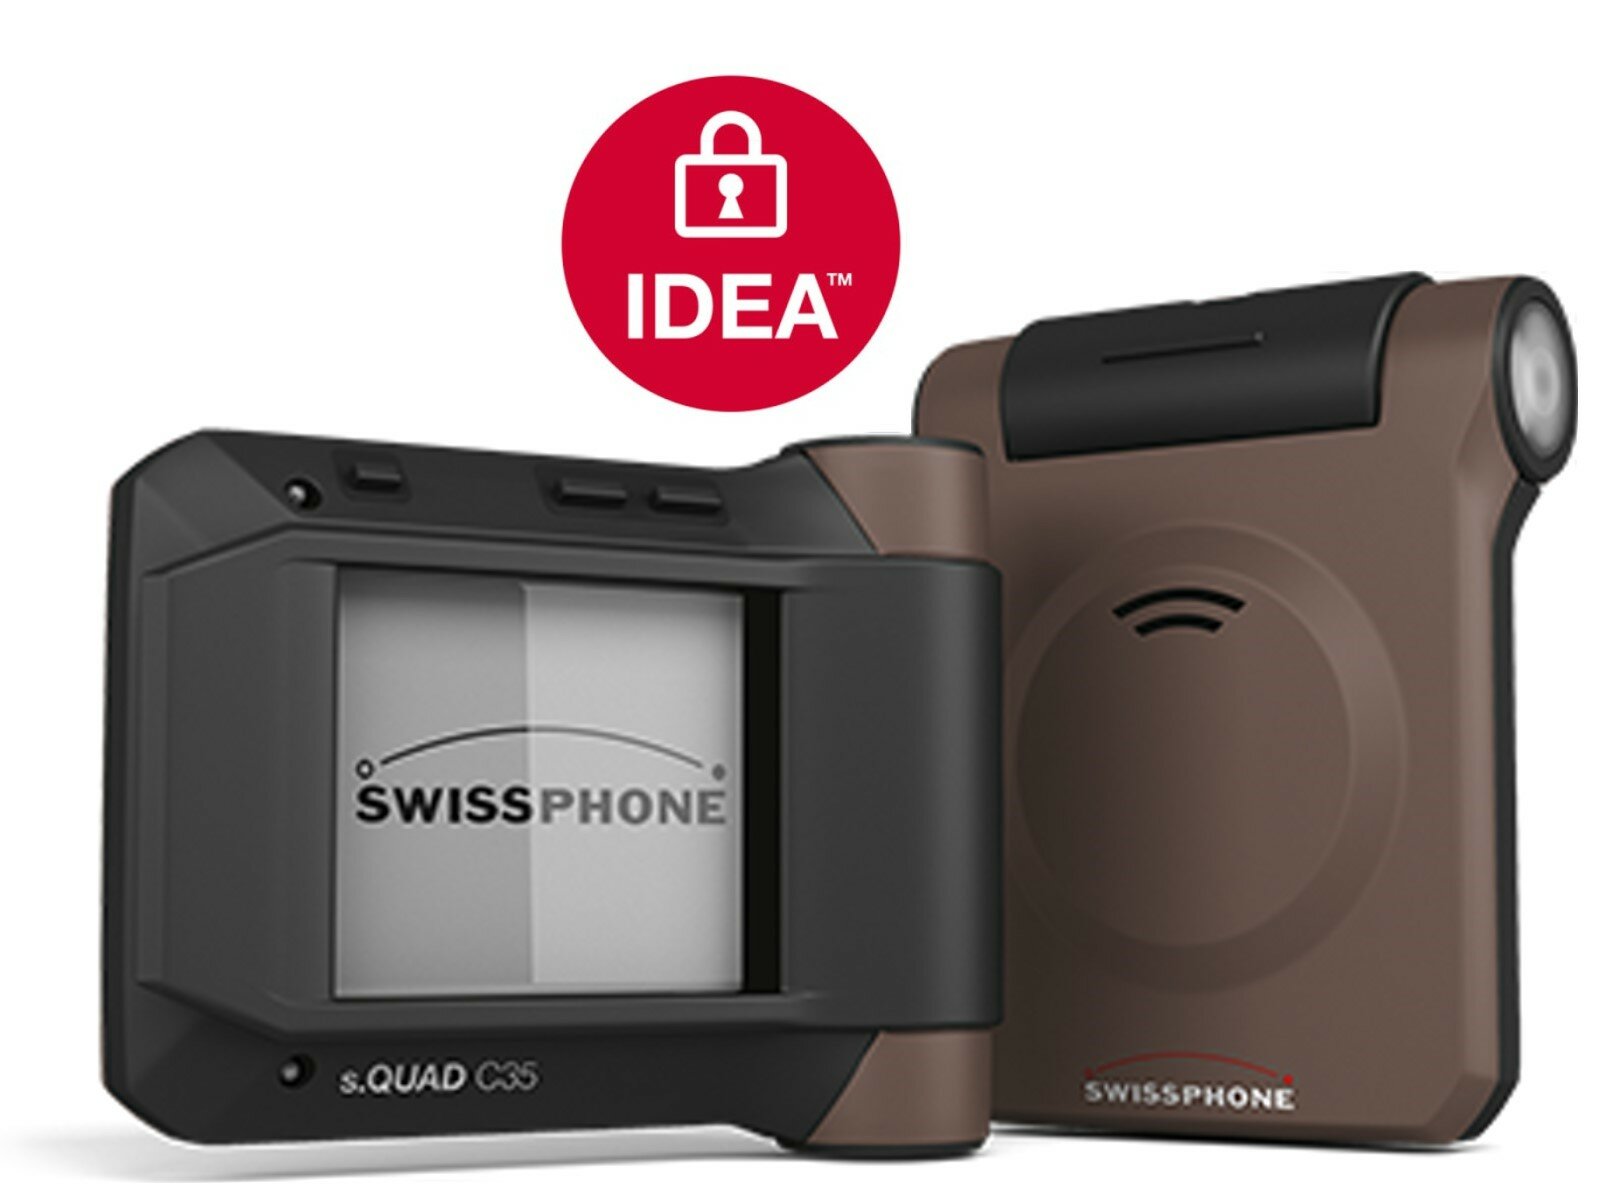 Swissphone s.QUAD C35 V